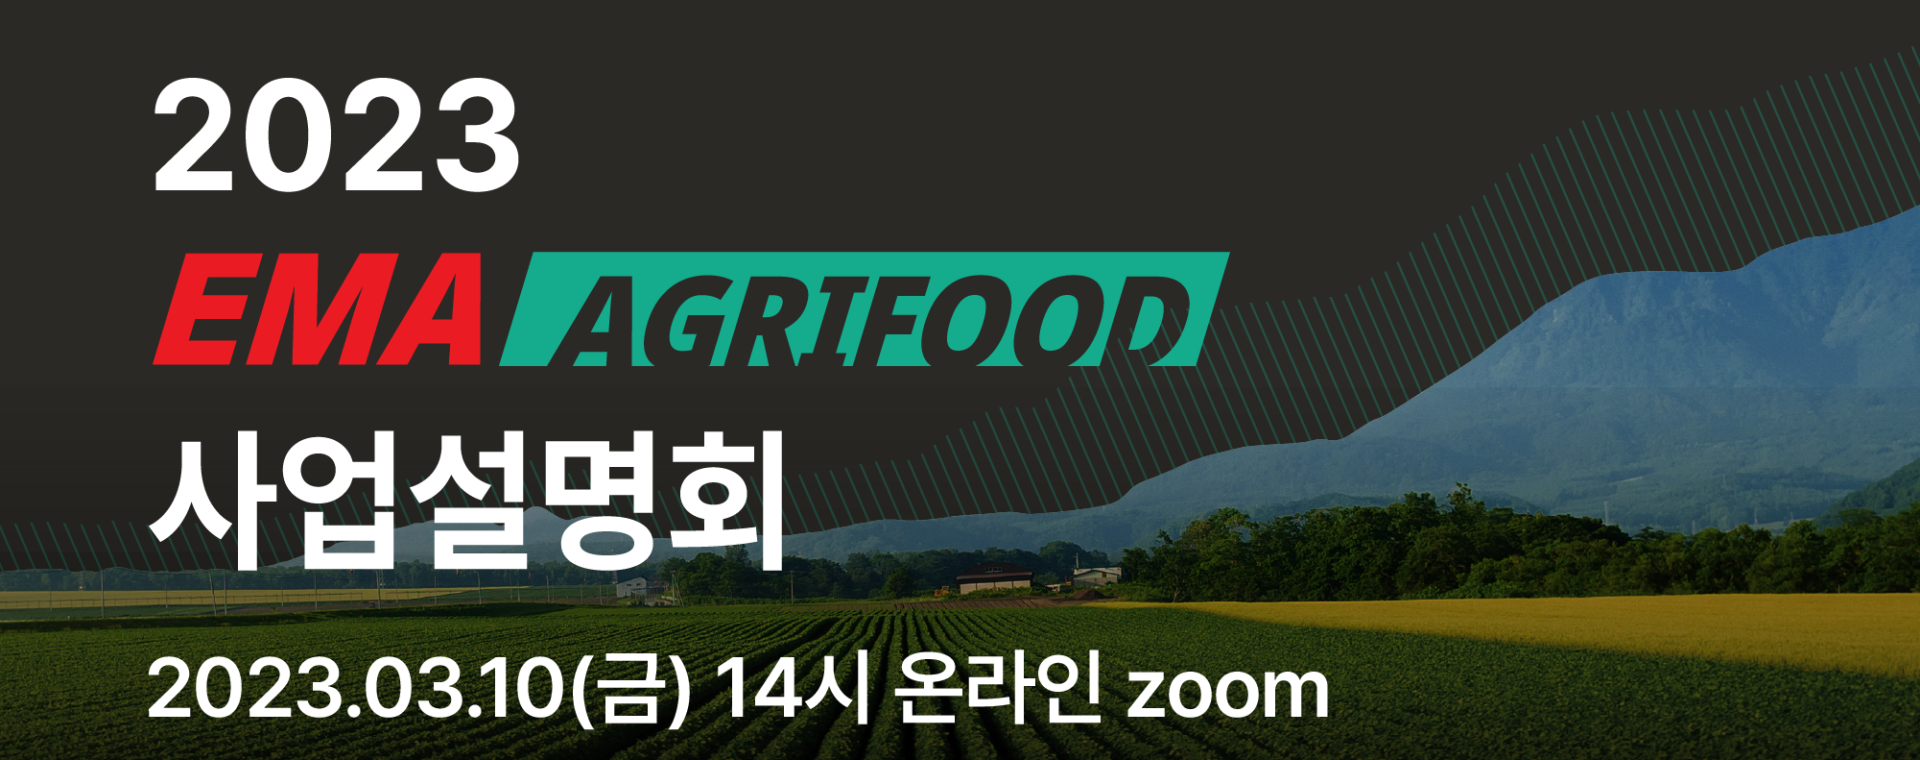 [MYSC] 농식품 스타트업 액셀러레이팅 프로그램(EMA-AGRIFOOD) 온라인 사전 설명회